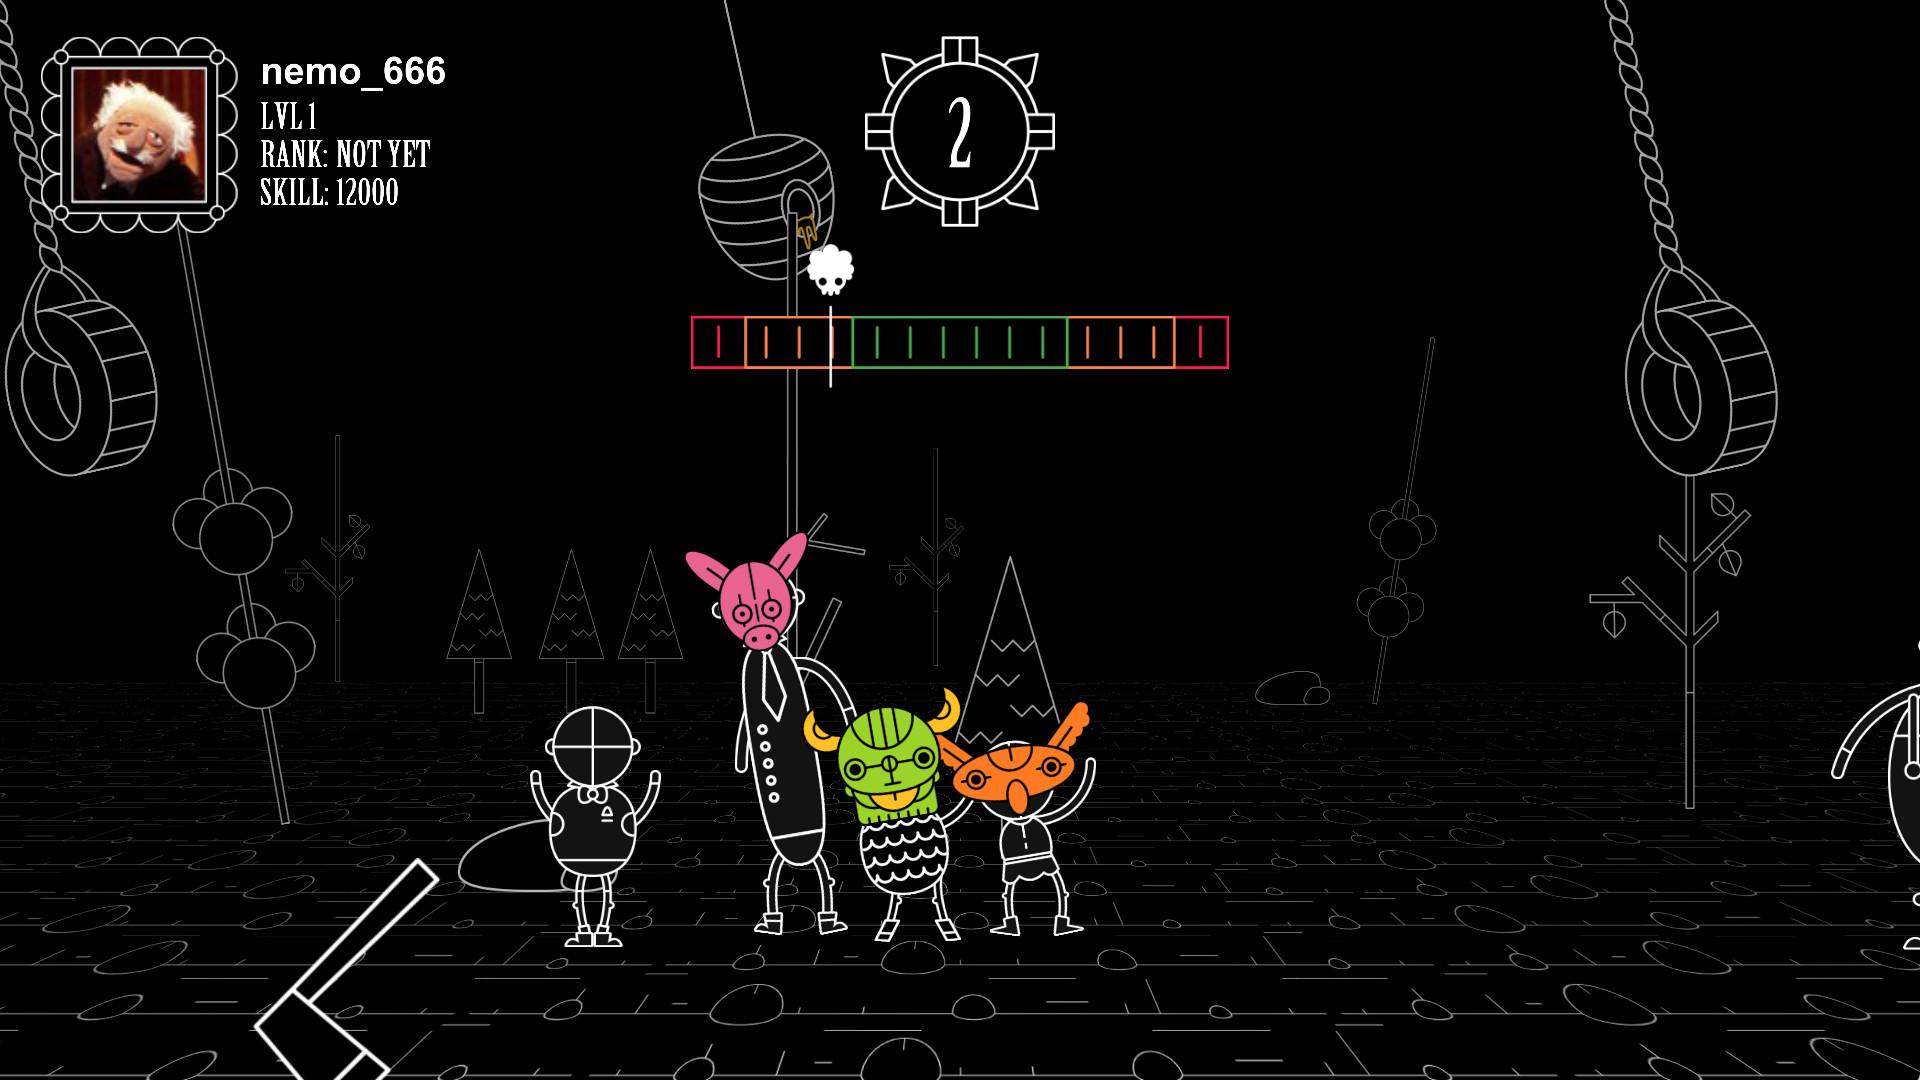 Screenshot №1 from game Masky